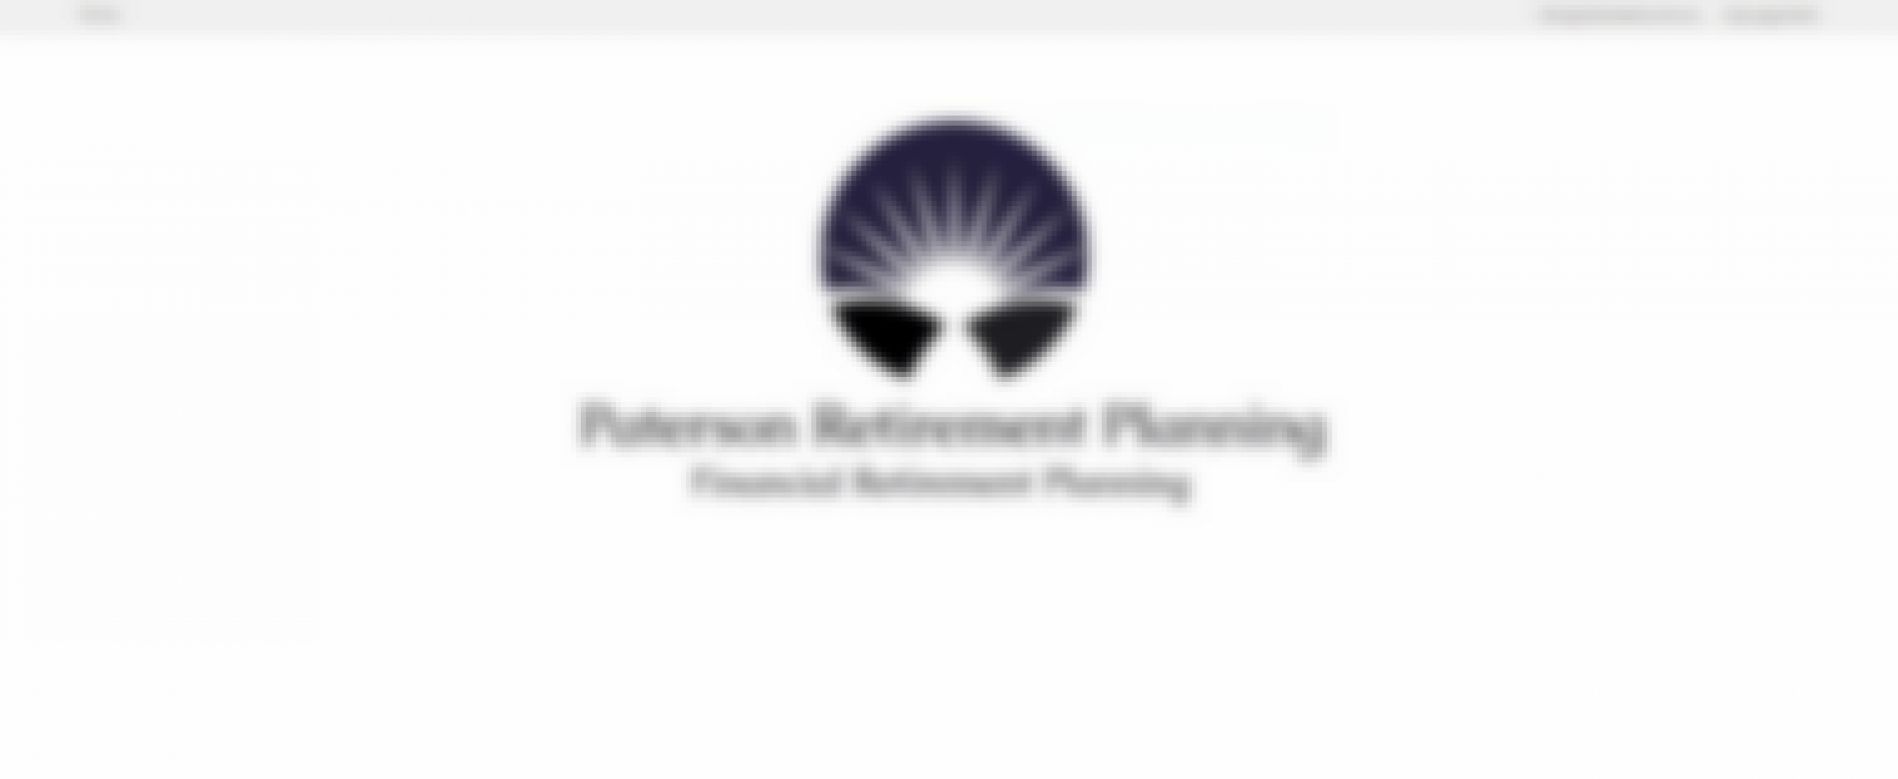 paterson retirement planning financial planners & advisors melbourne